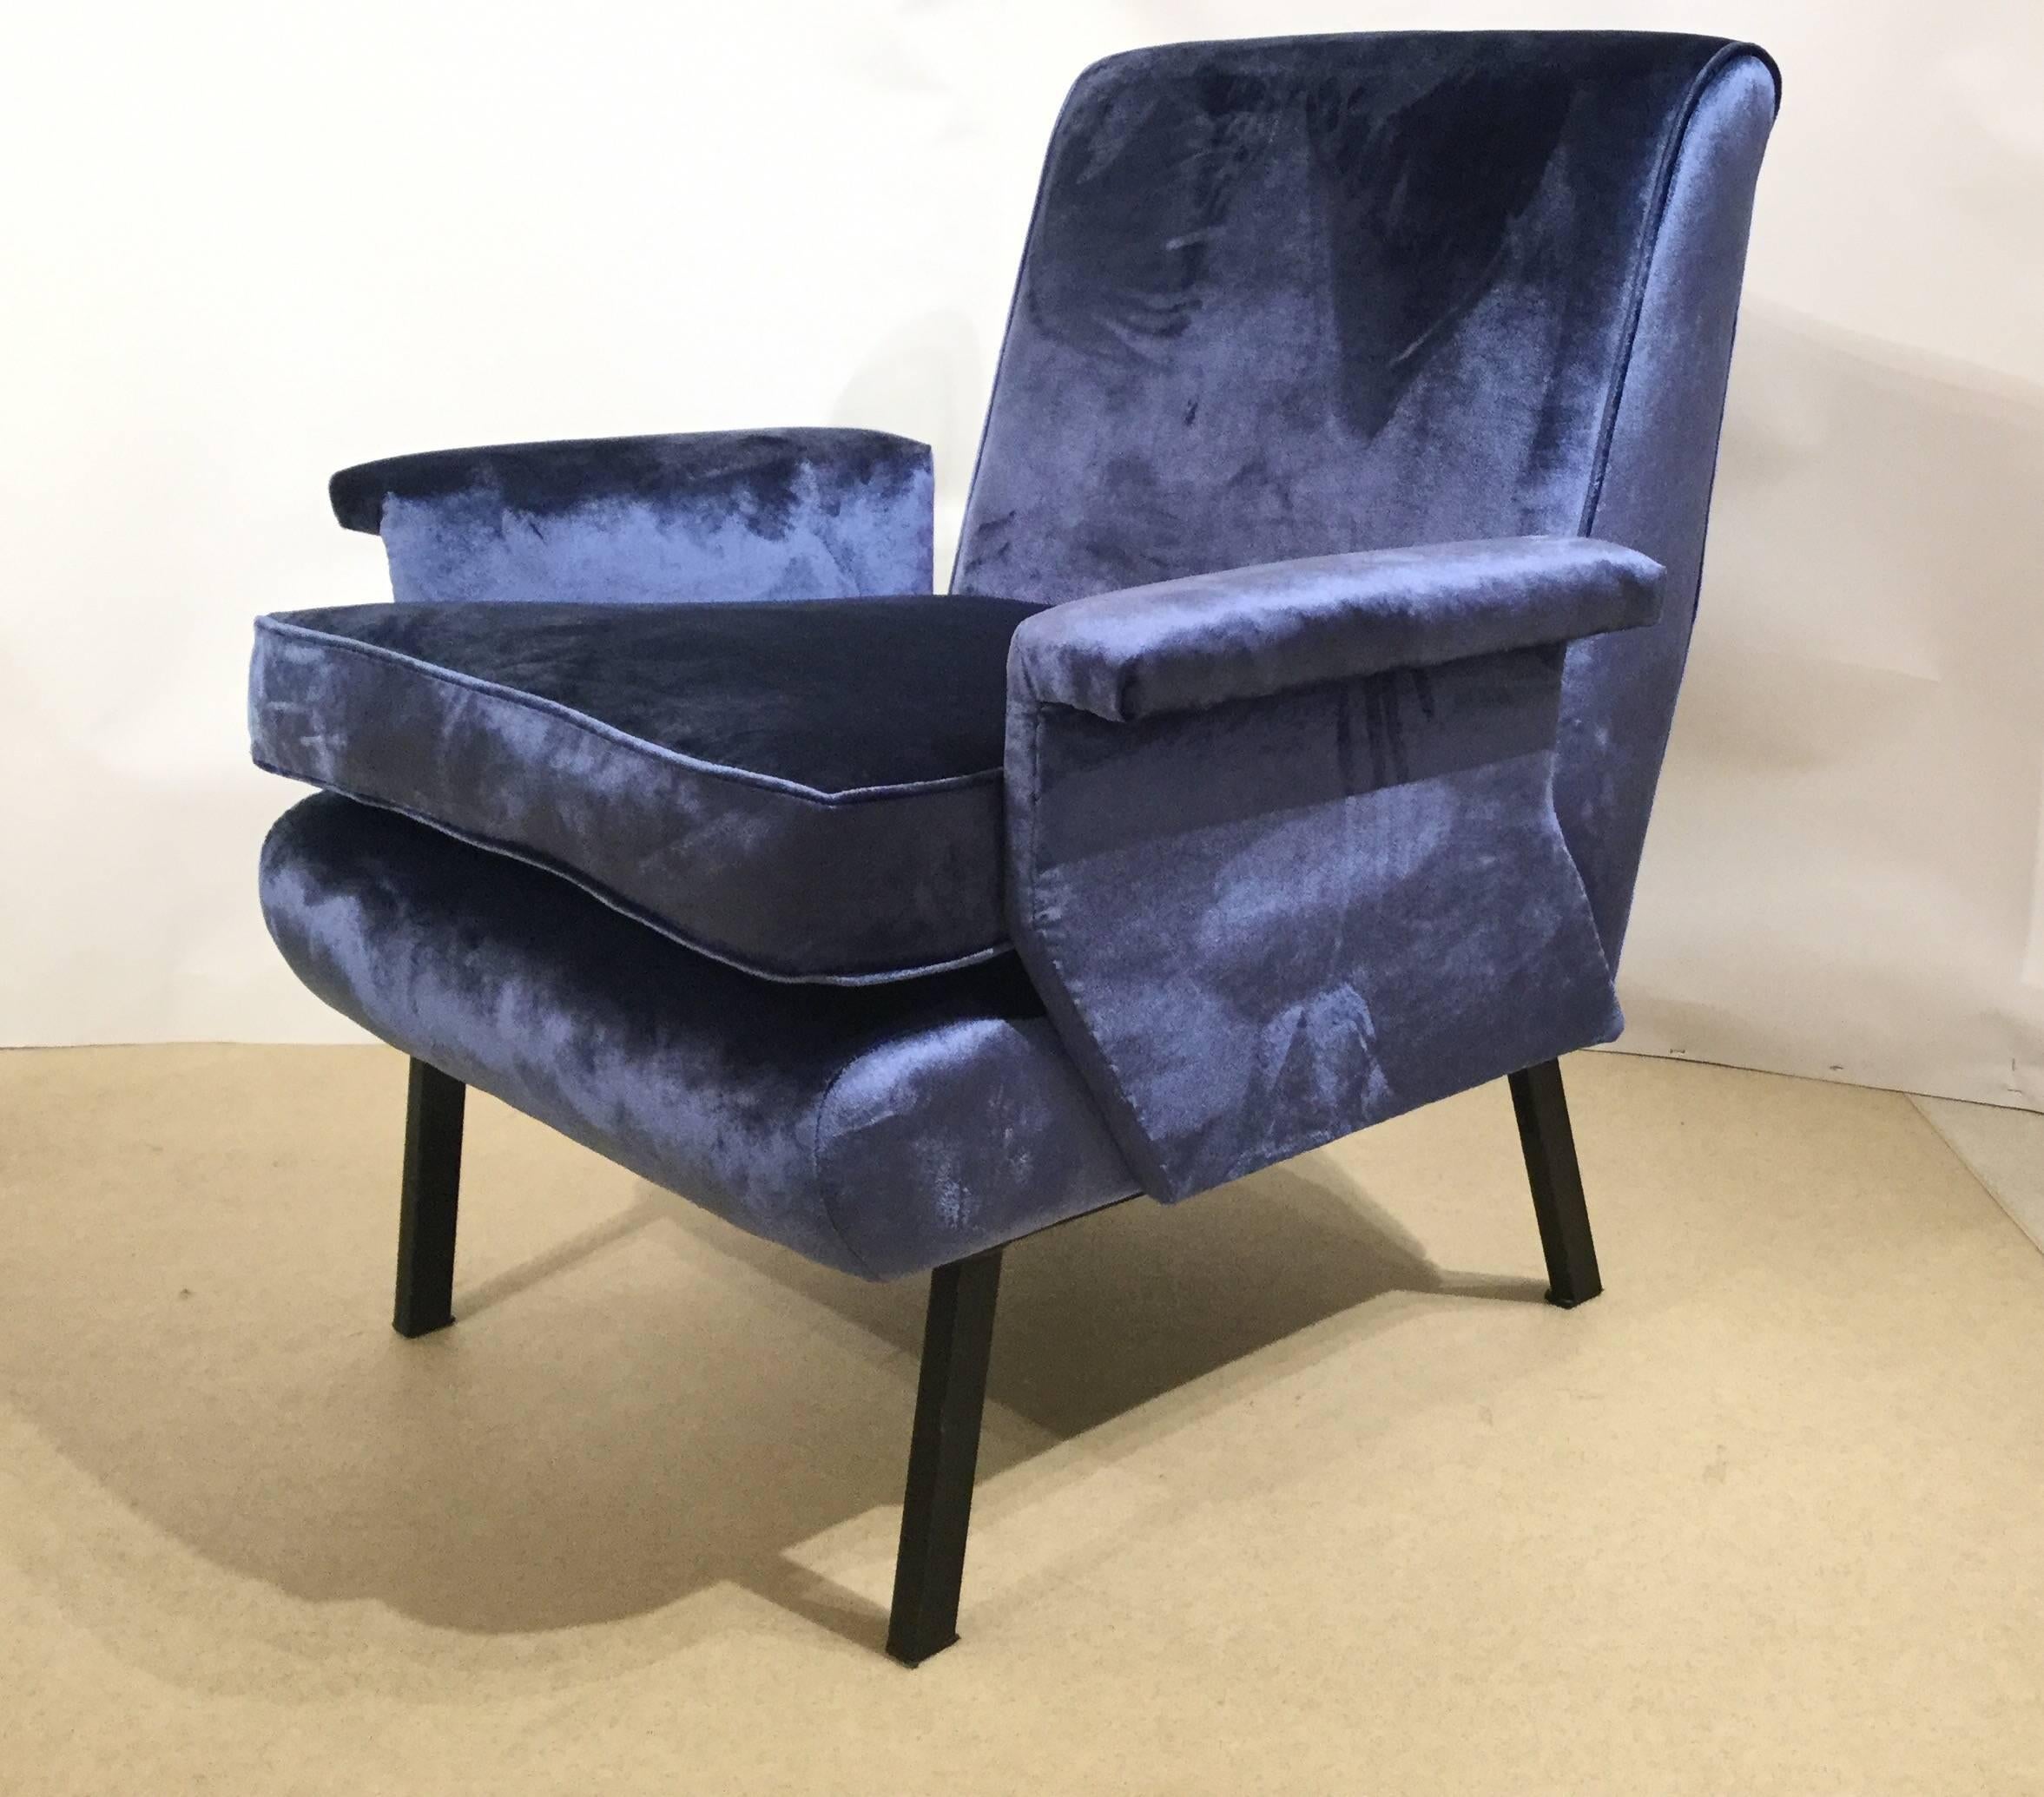 Pair of chairs reupholstered in velvet fabric. 
Metal legs,
Italian, 1950s.